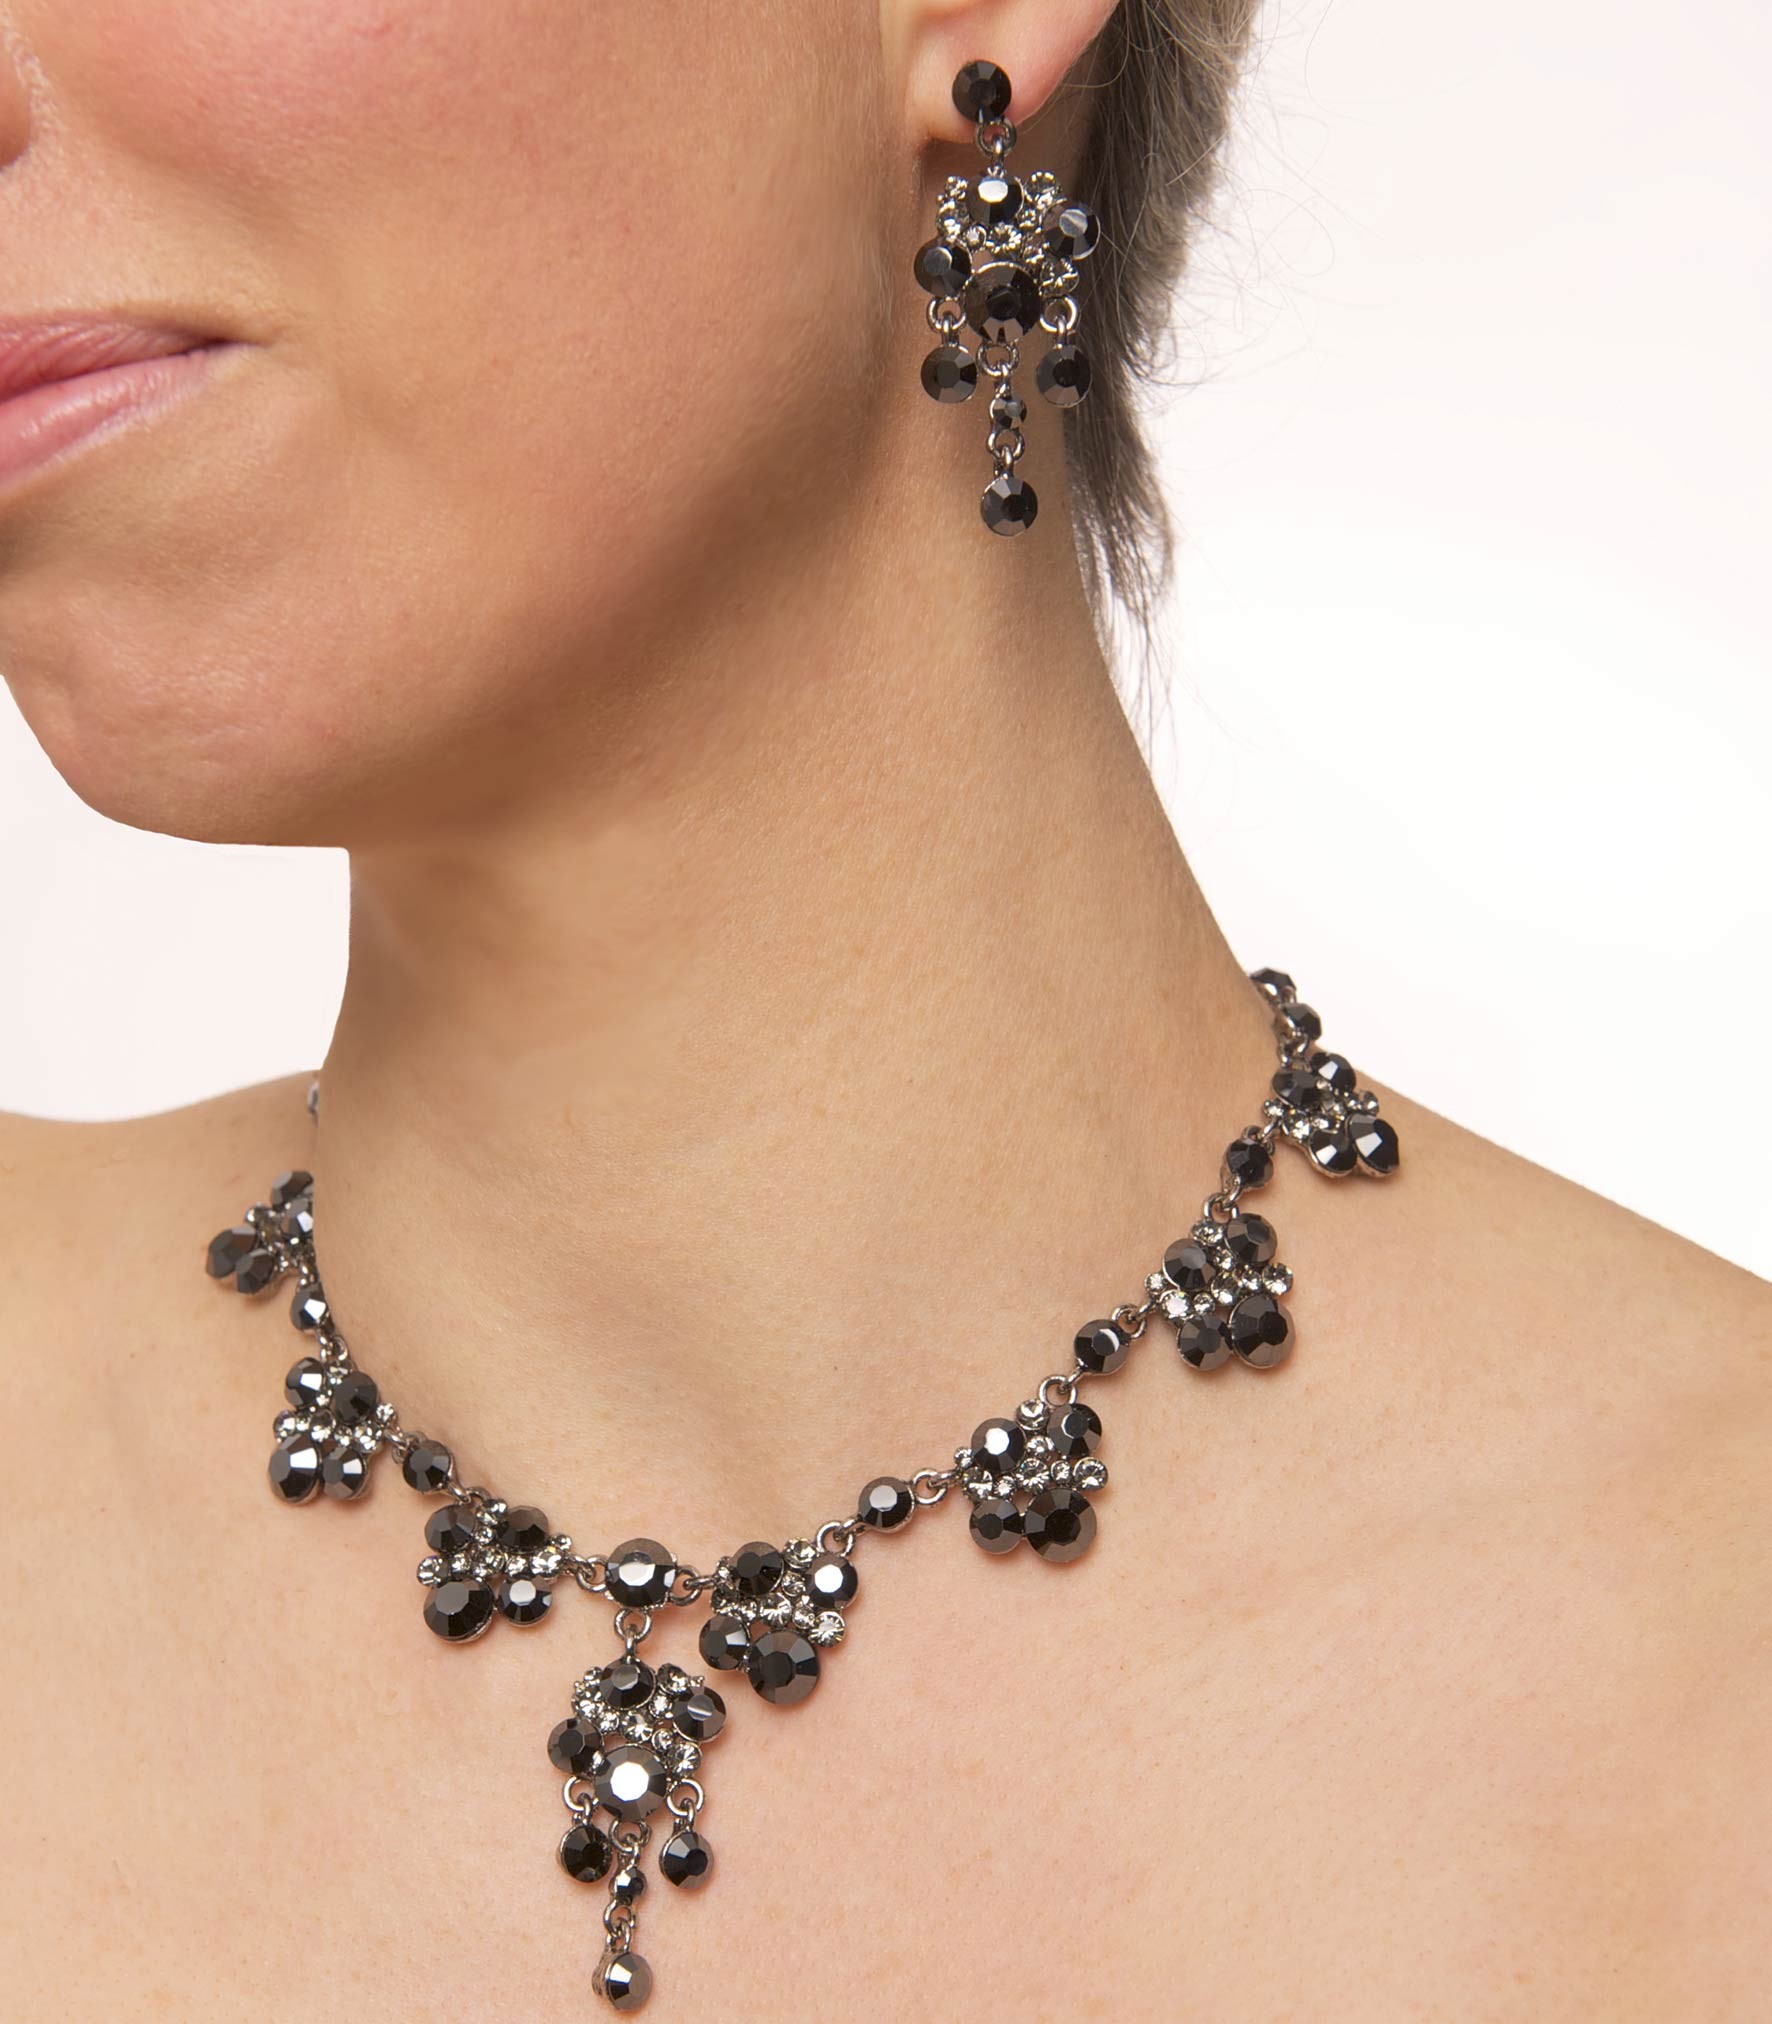 Swarovski Crystal Necklace Jewelry Bridal backdrop necklace crystal and pearl statement wedding swarovski